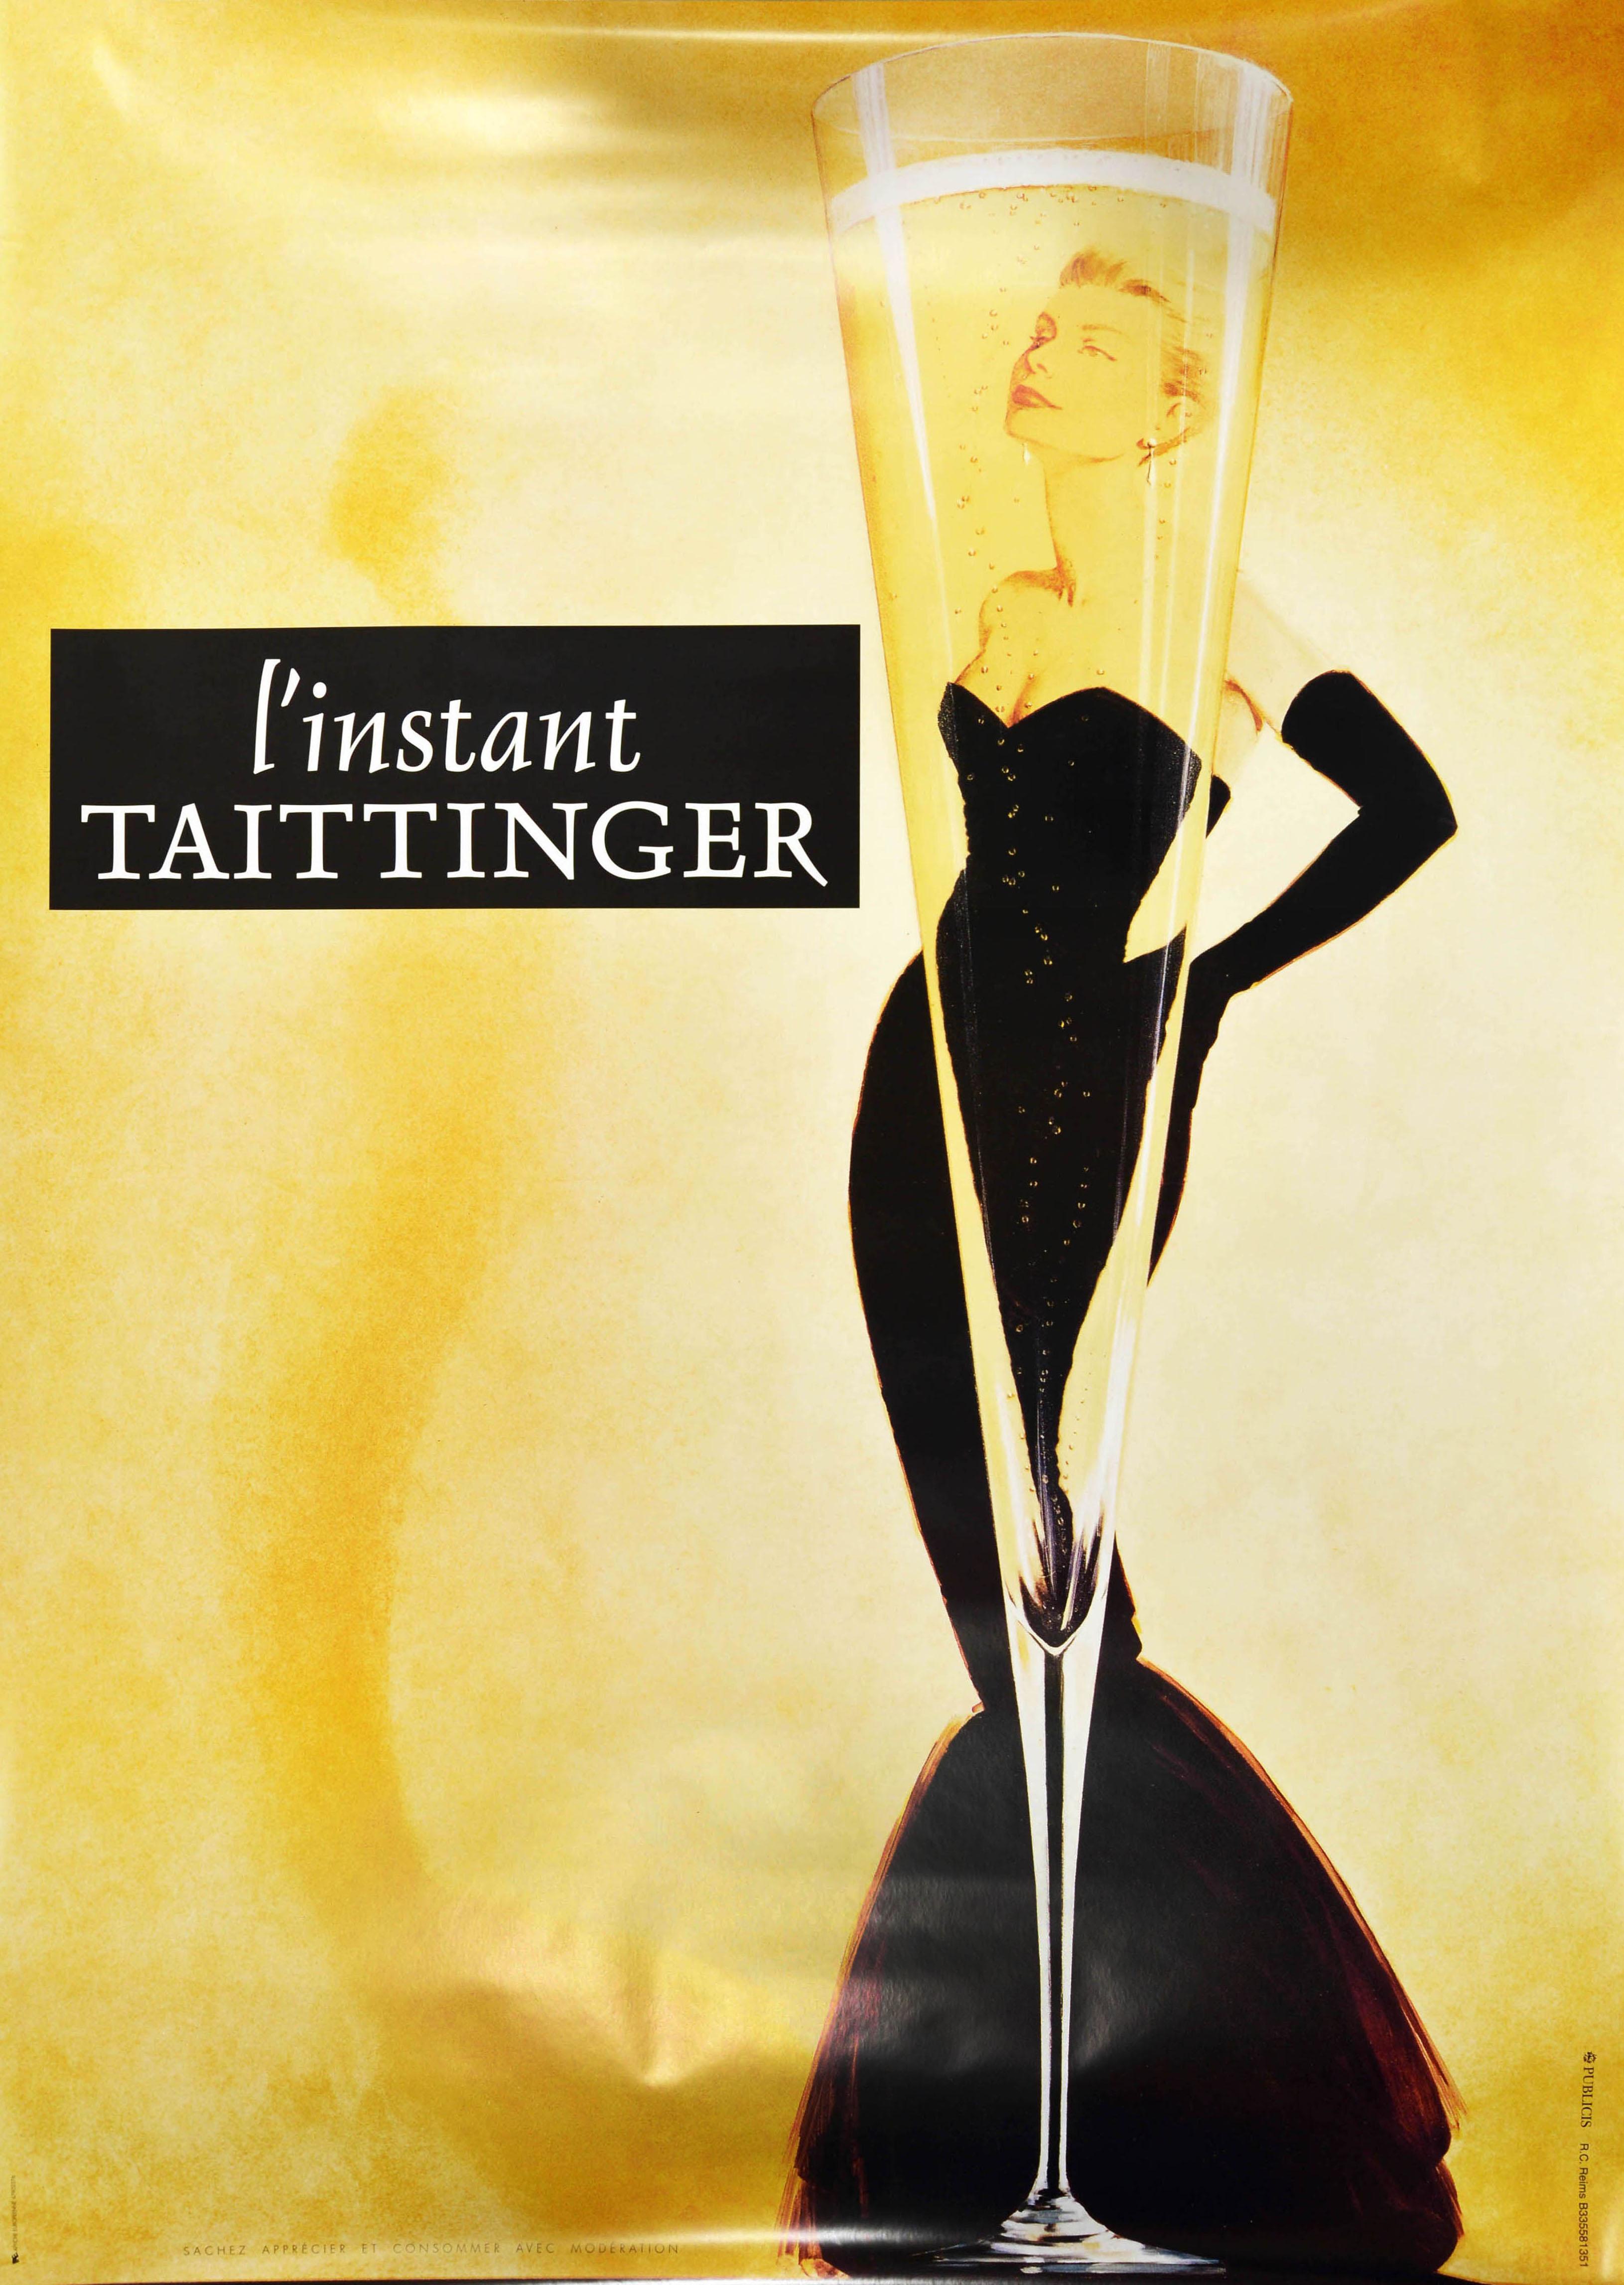 Unknown Print - Original Vintage Drink Advertising Poster L'Instant Taittinger Champagne Design